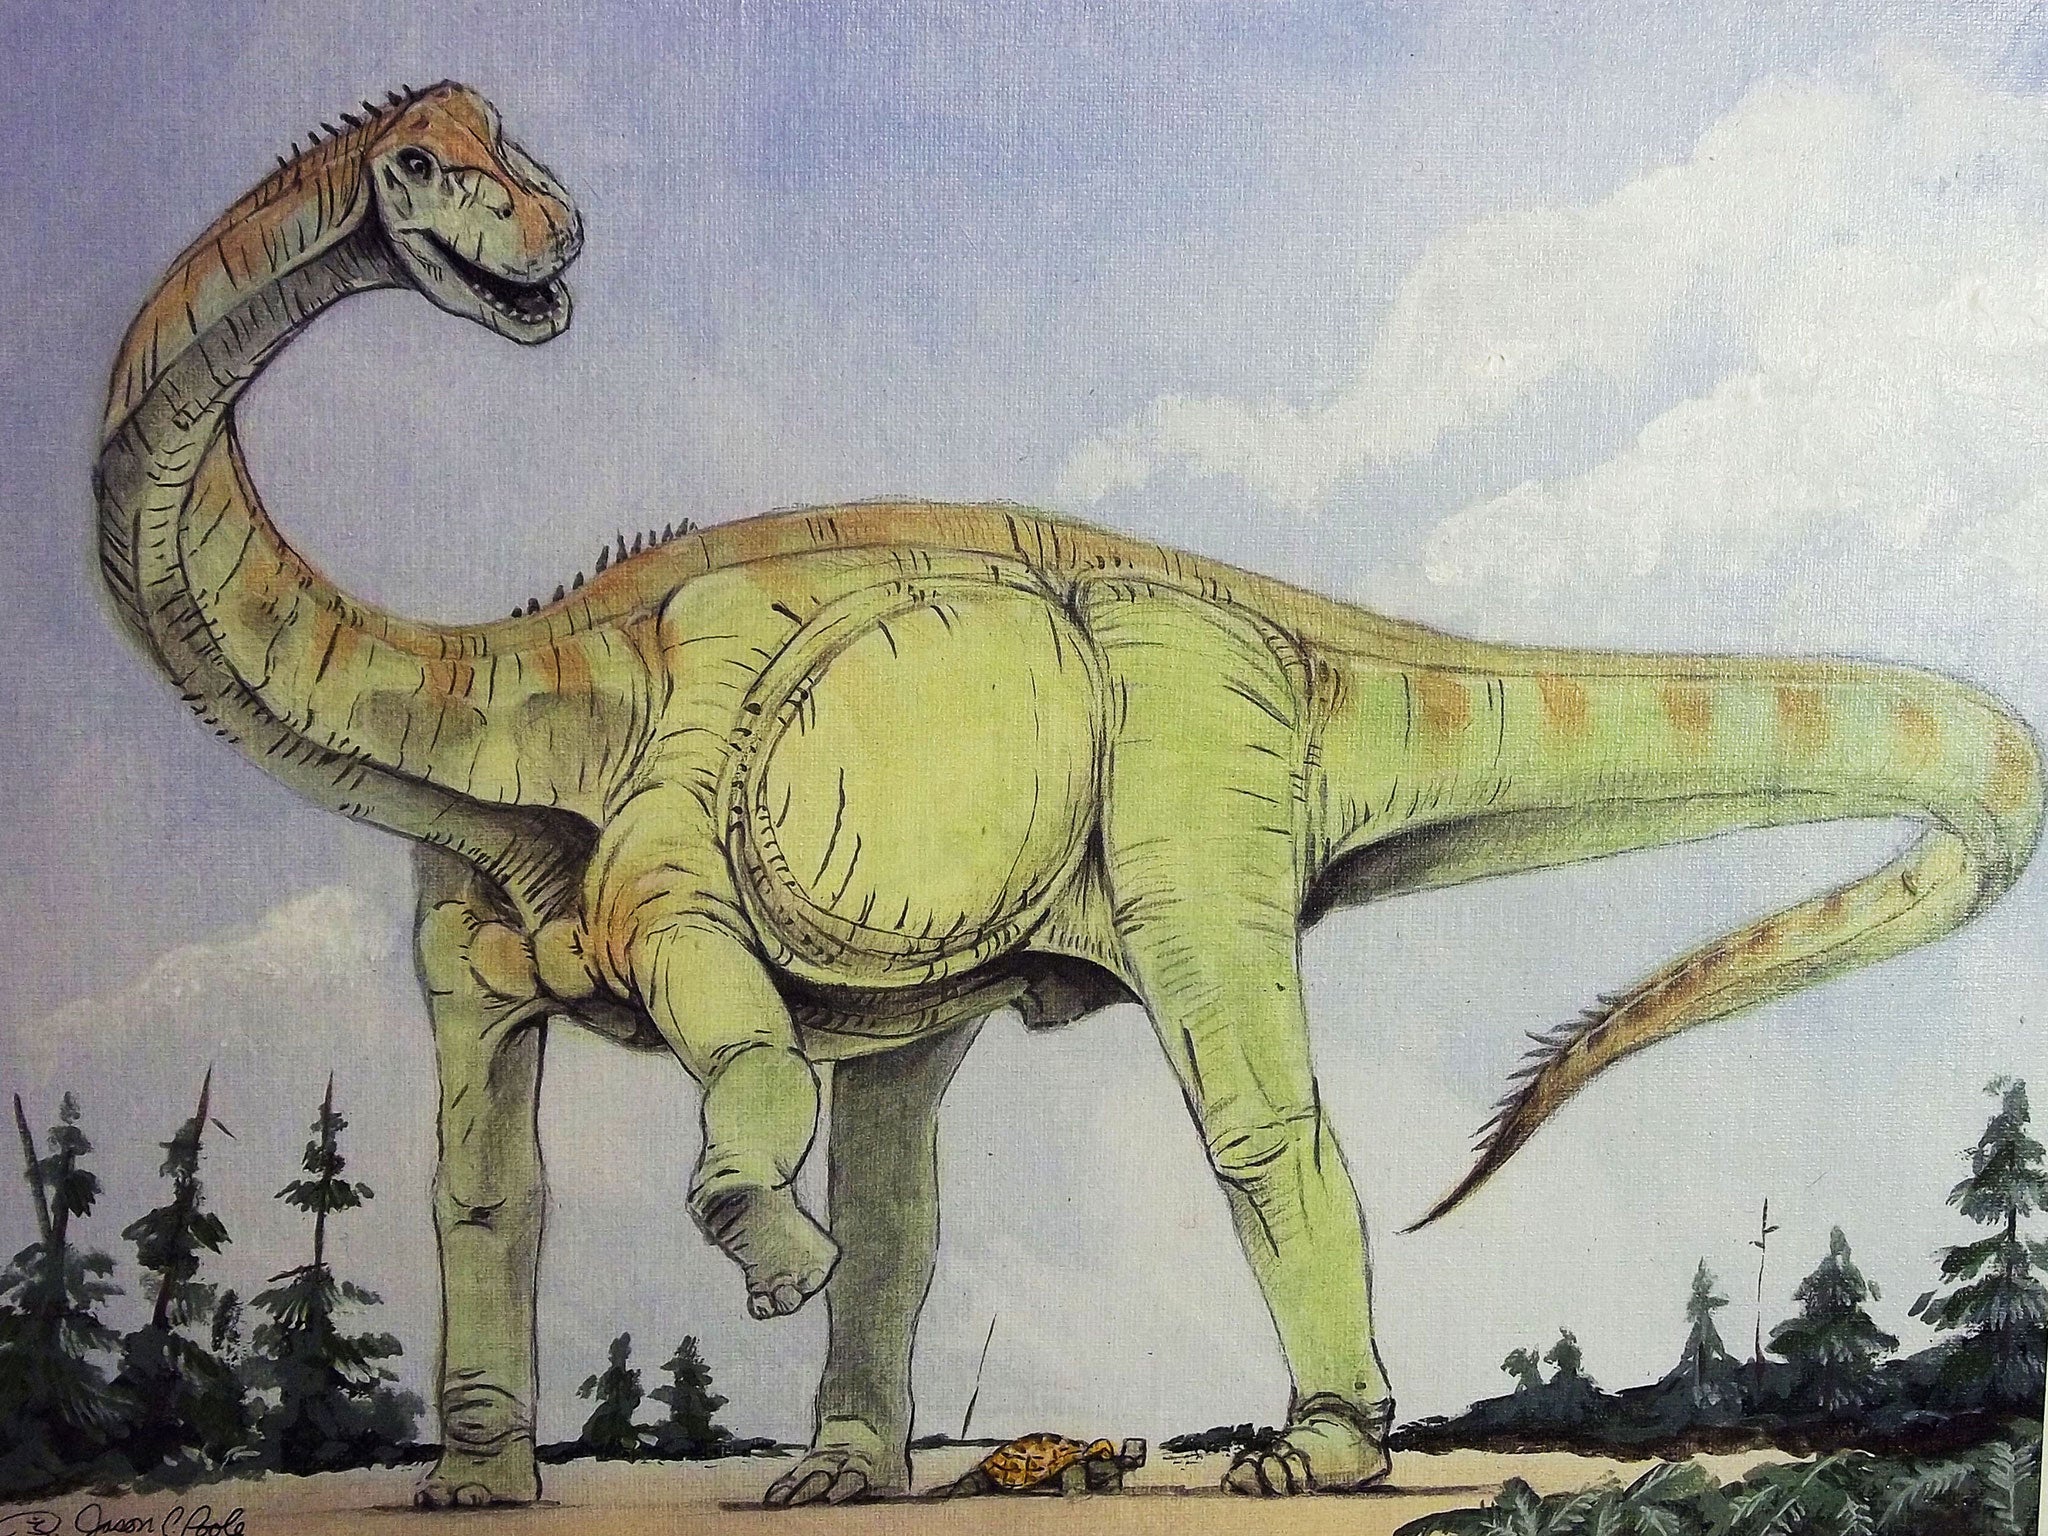 A sauropod